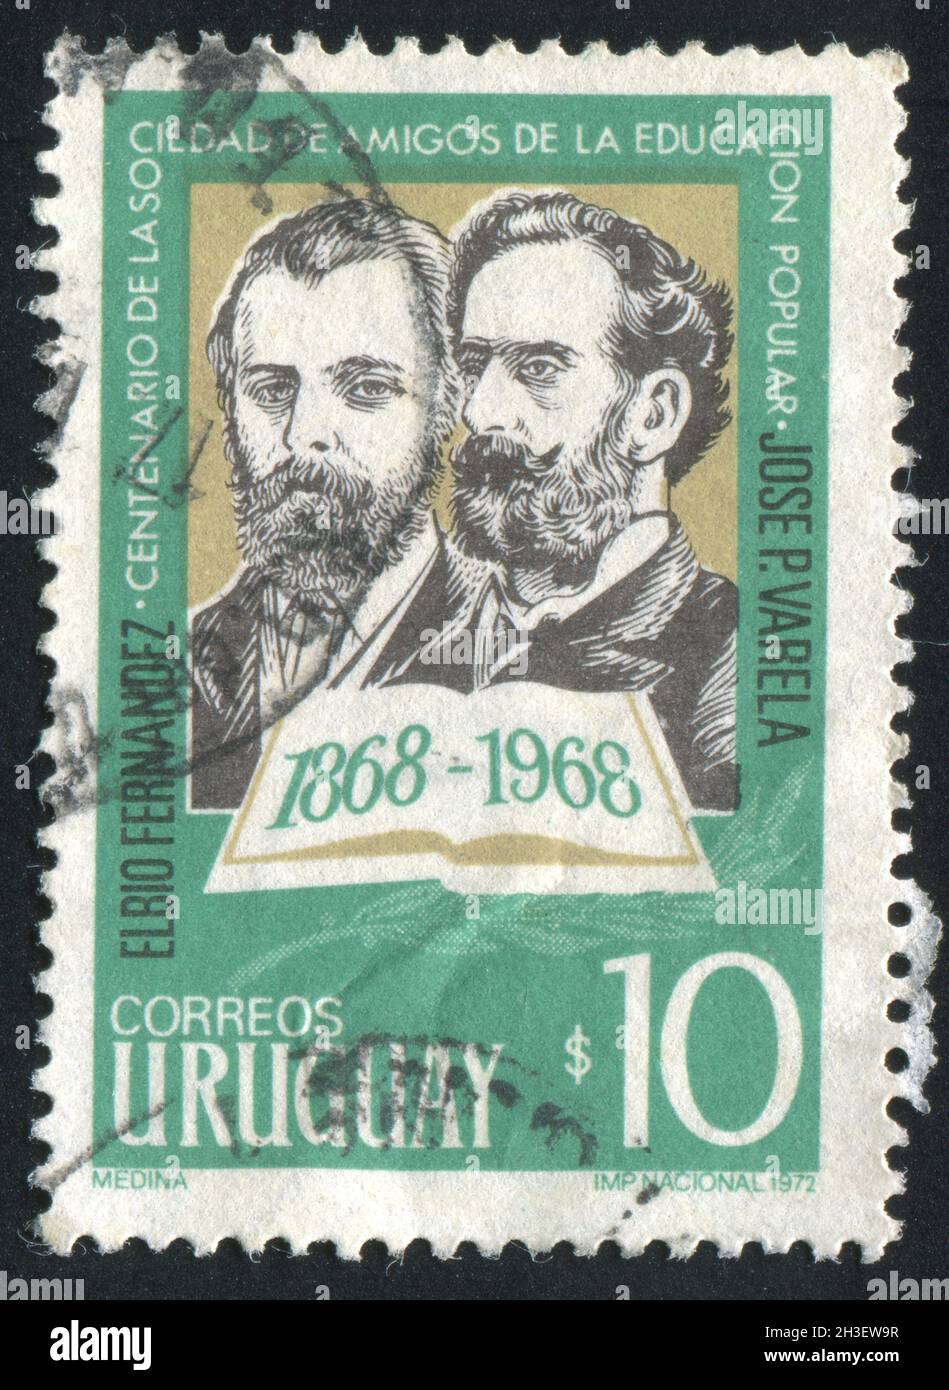 URUGUAY - CIRCA 1973: stamp printed by Uruguay, shows Elbio Fernandez and Jose Varela, circa 1973 Stock Photo